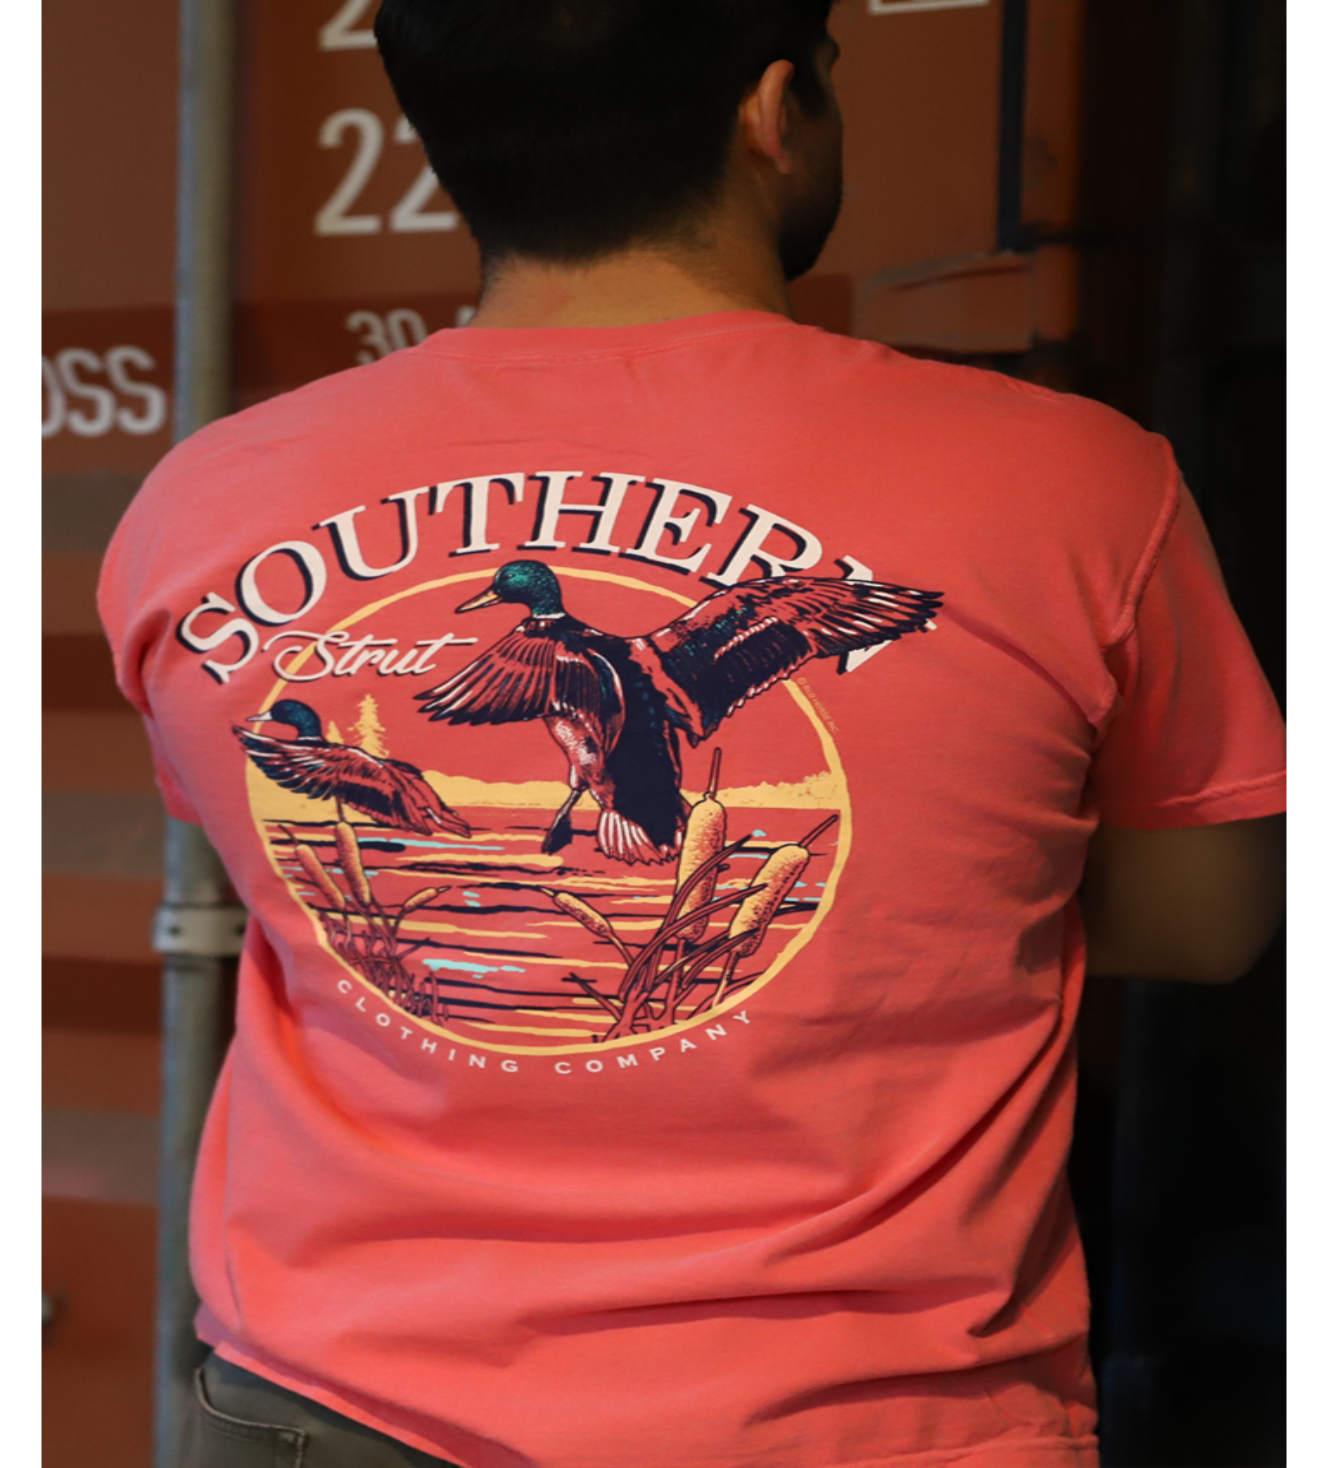 Duck Landing - Short Sleeve T-Shirt by Southern Strut